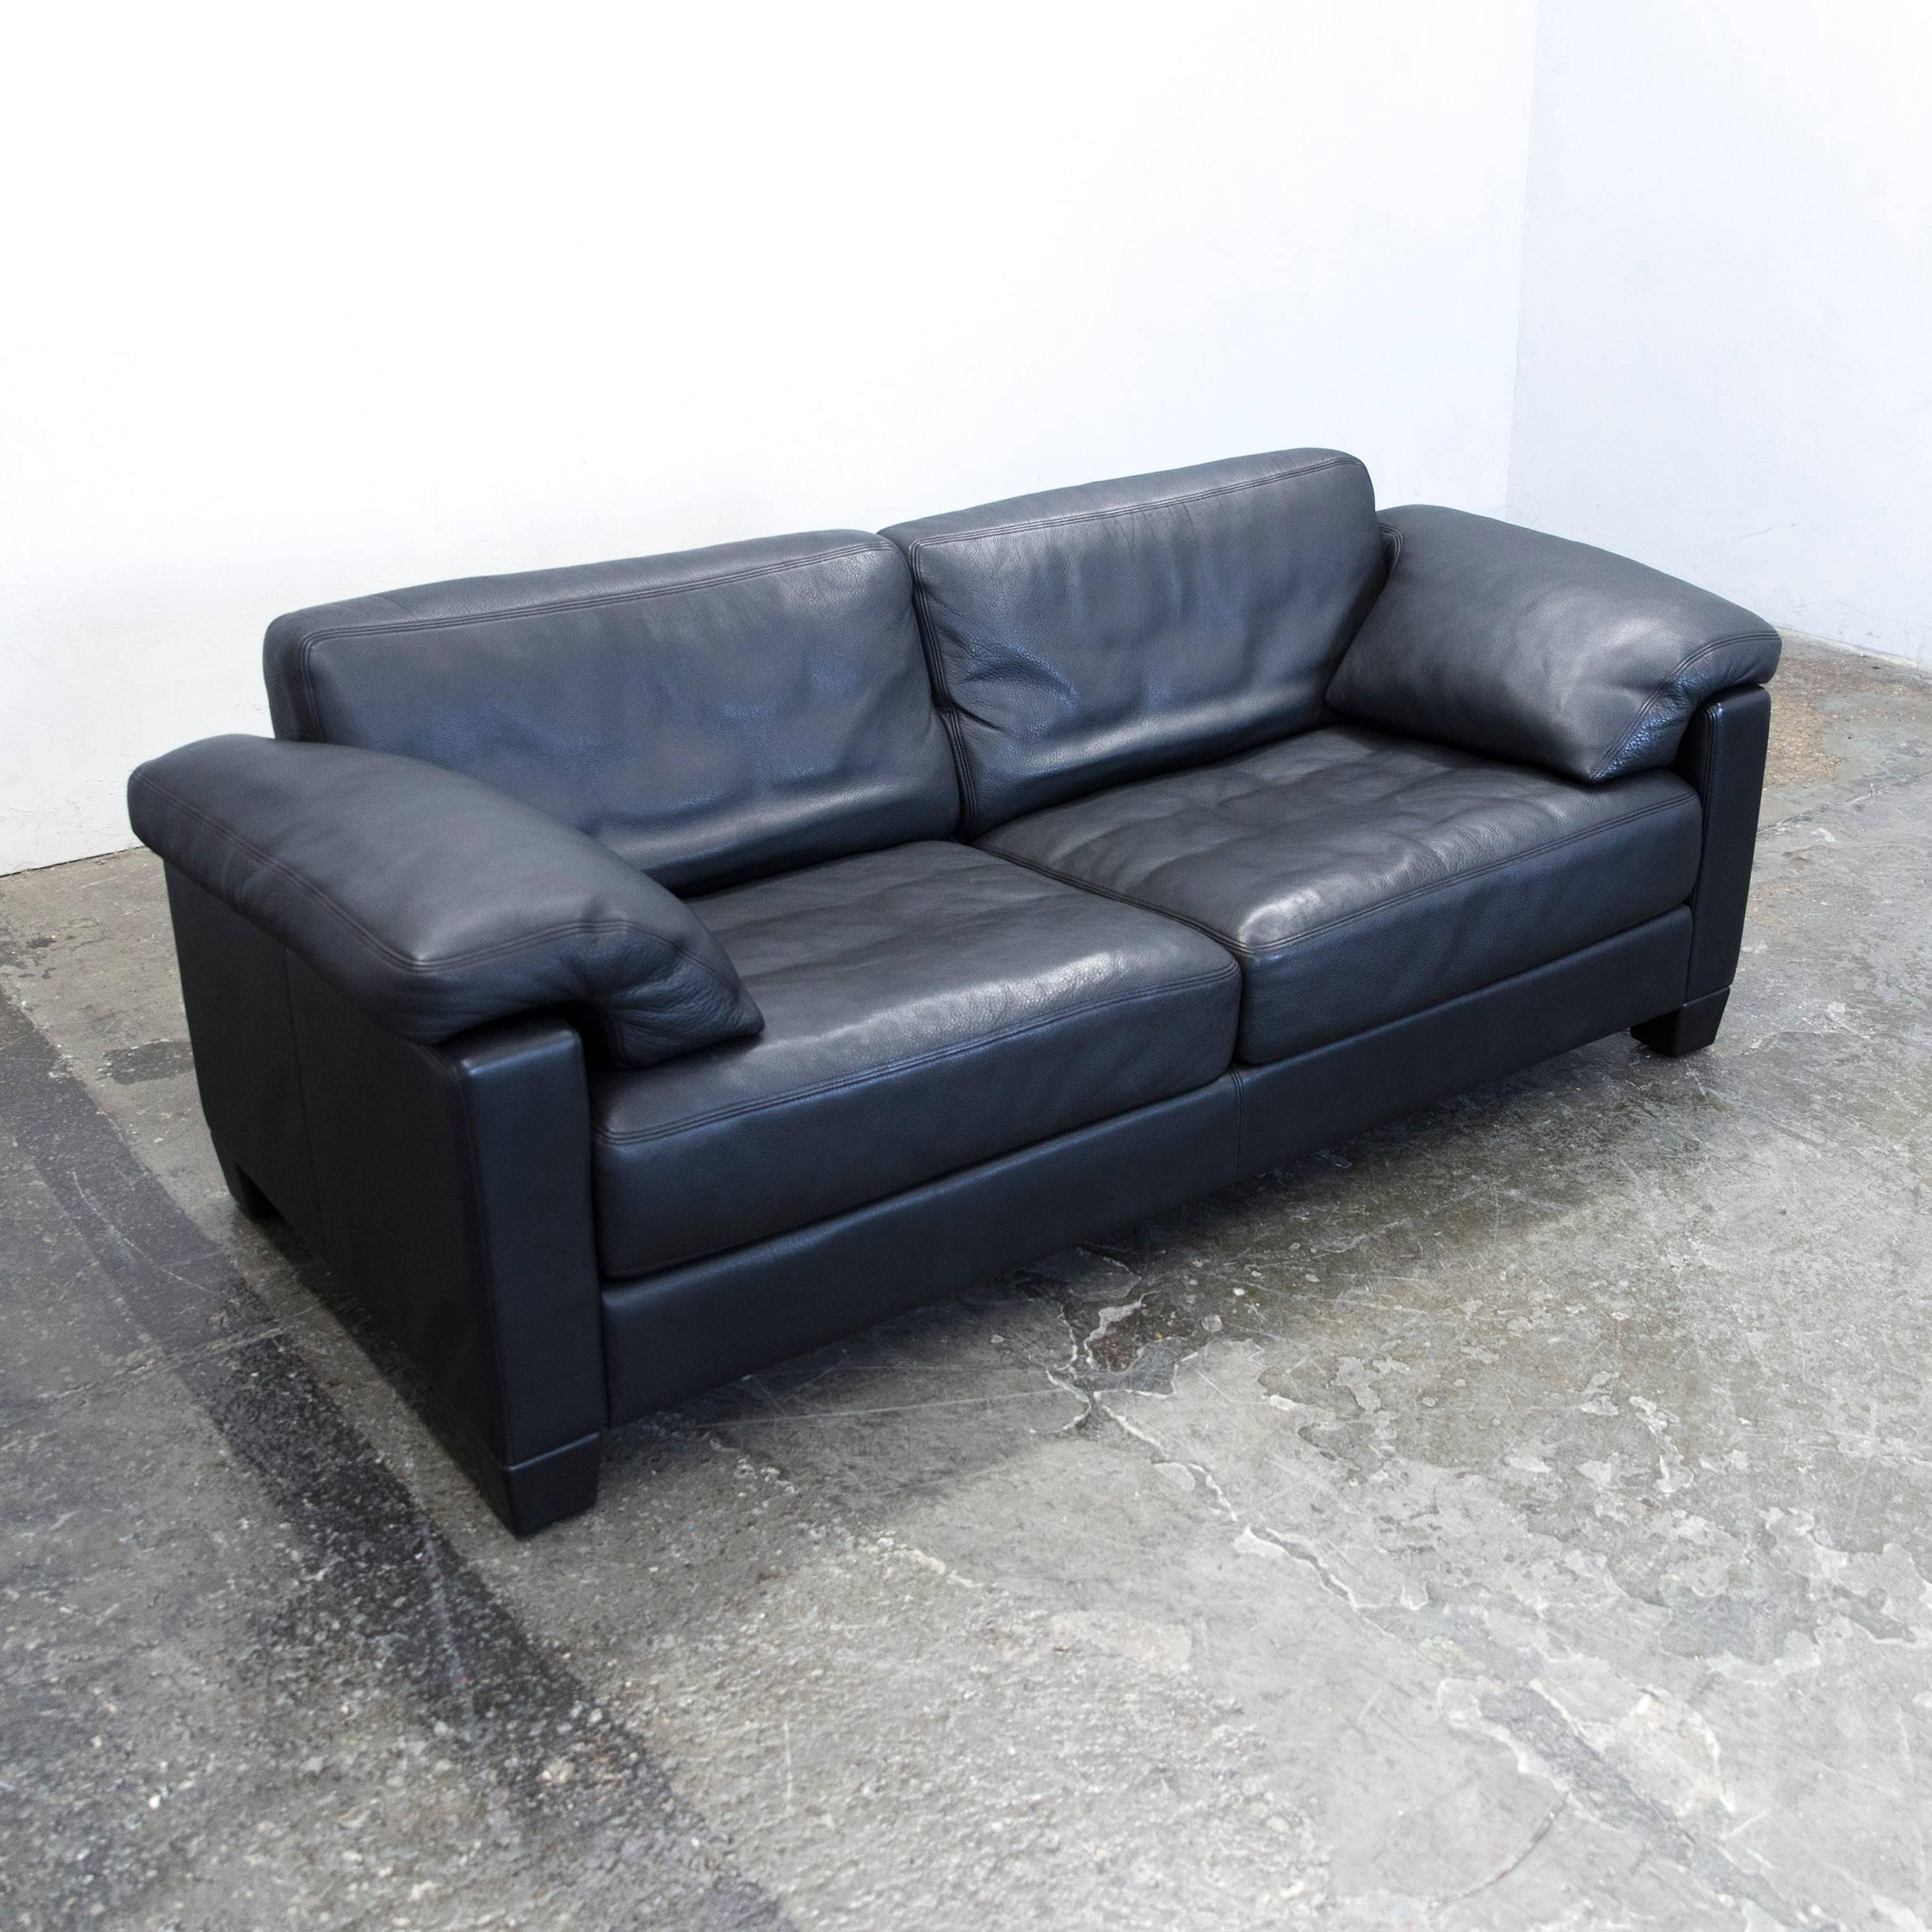 Black colored original De Sede DS 17 designer leather sofa, in a minimalistic and modern design, made for pure comfort.